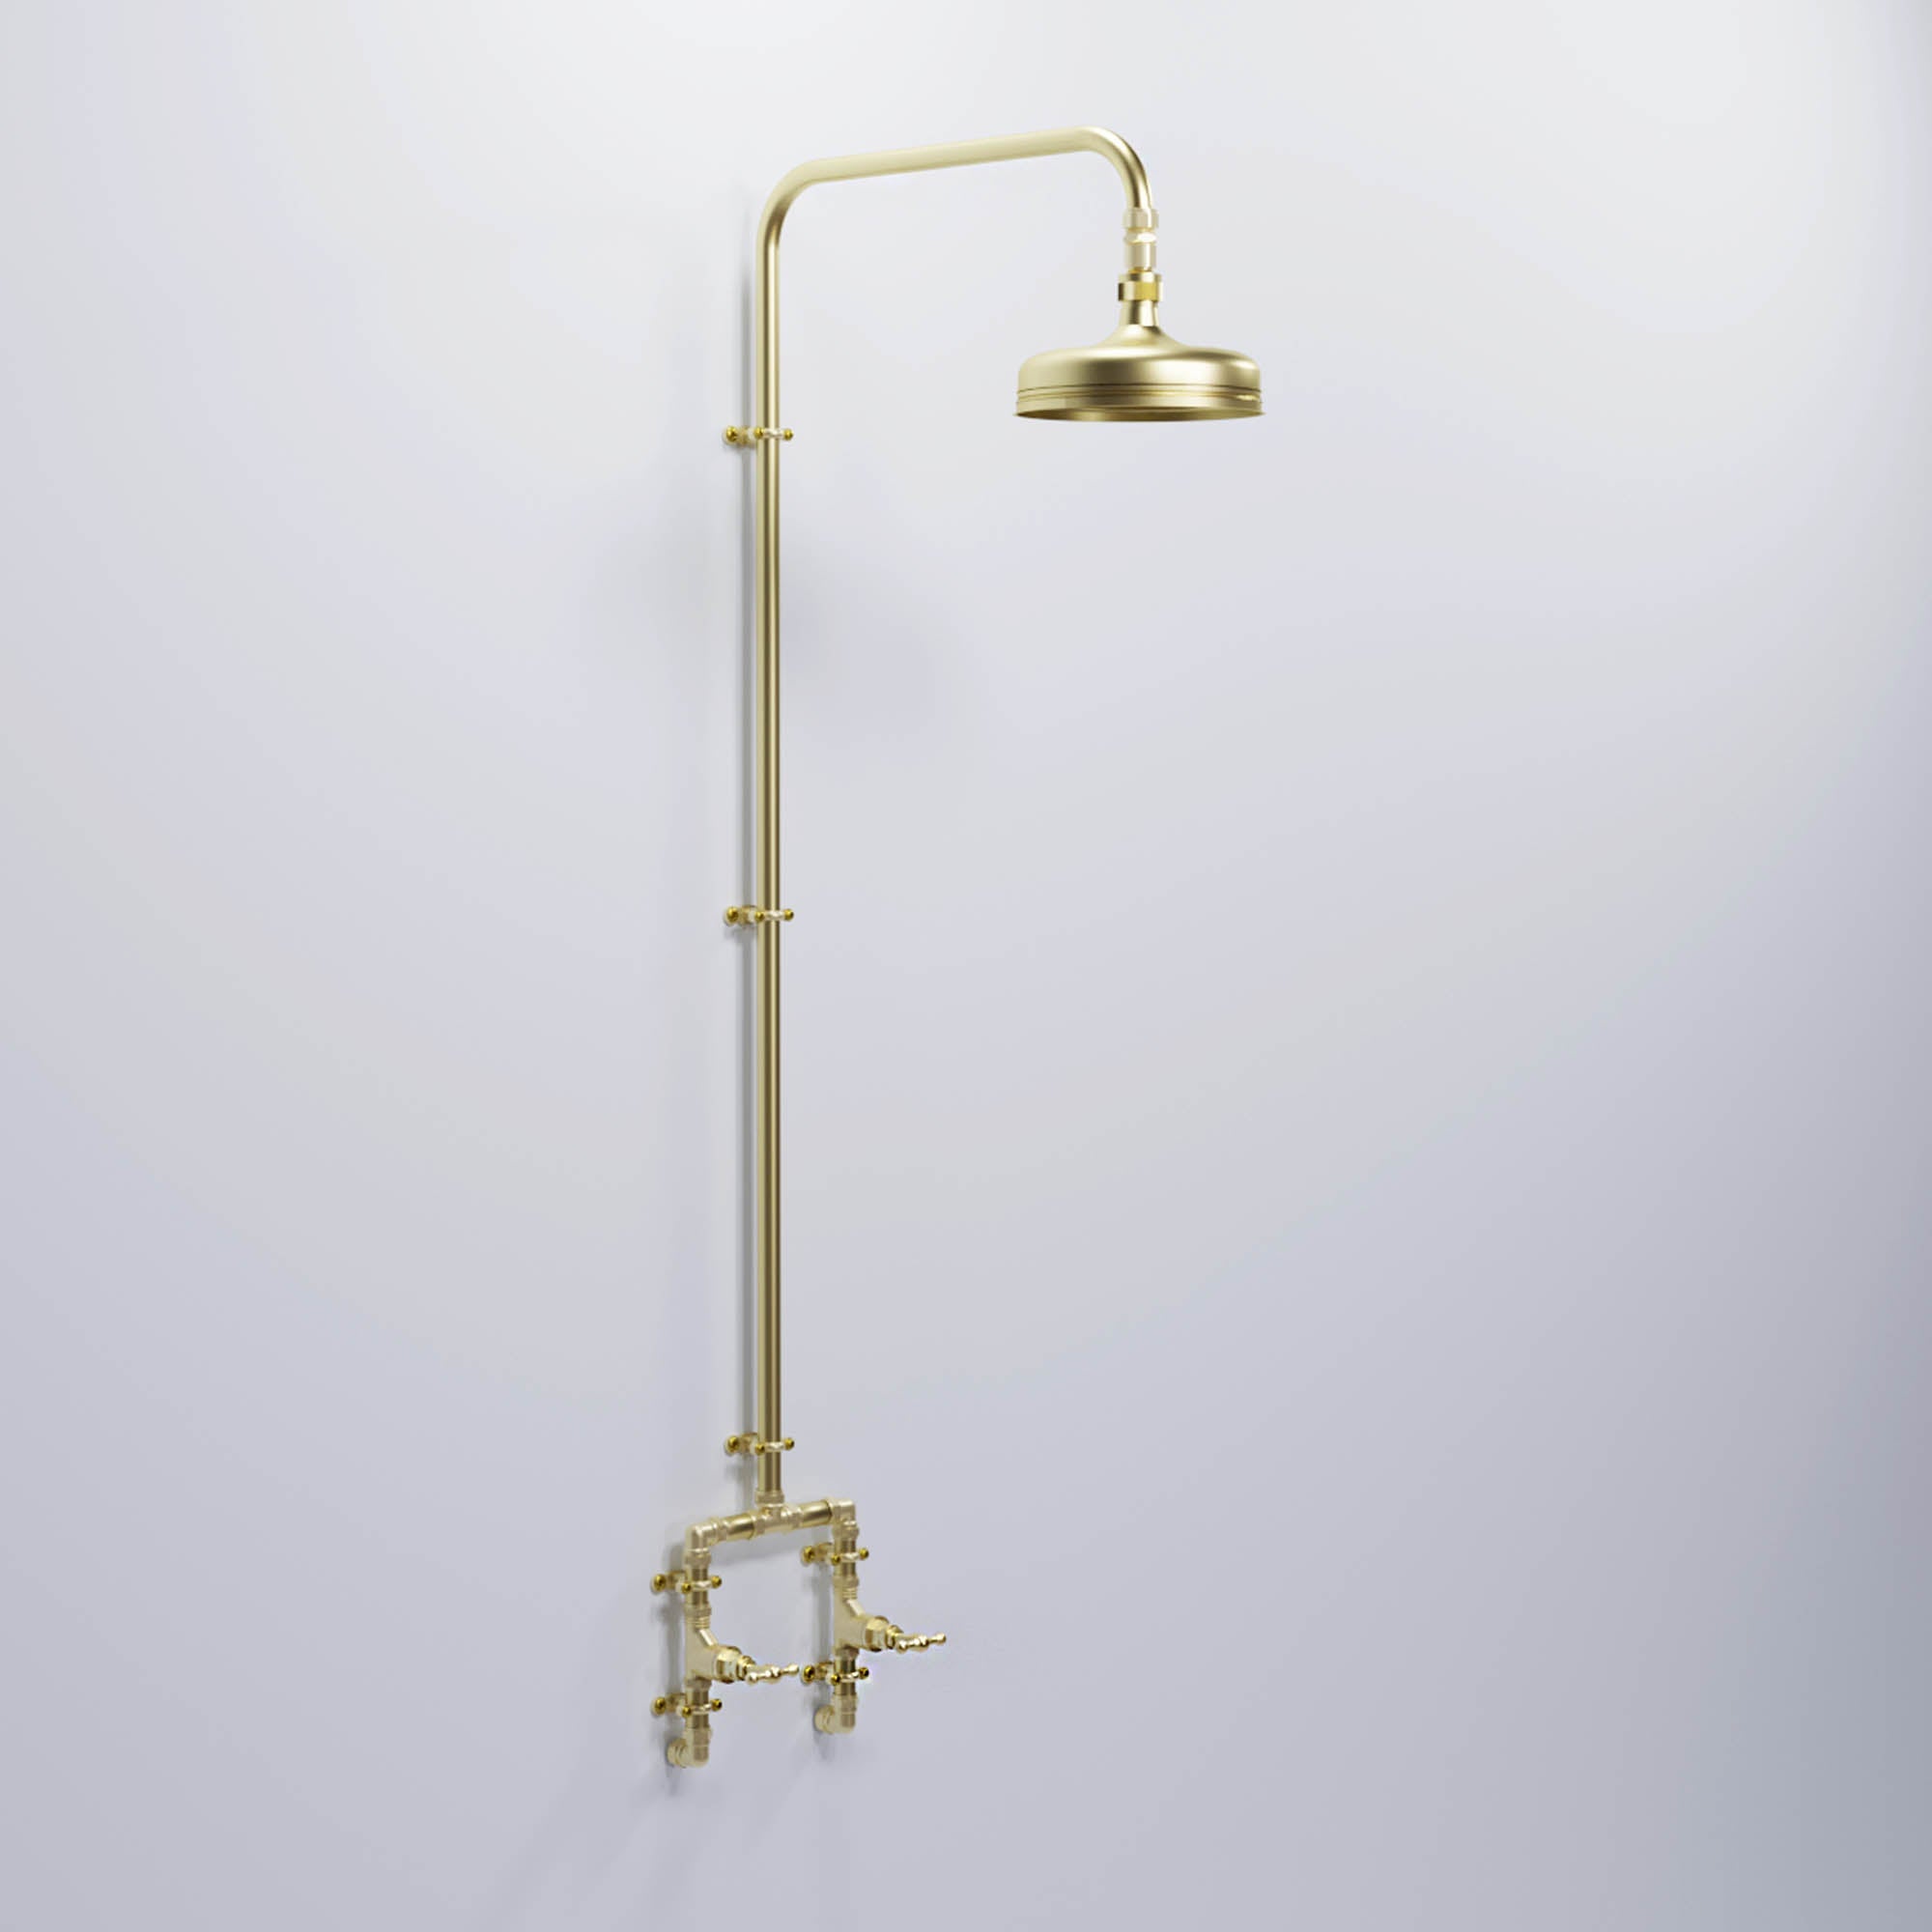 brass shower for a bathroom, wet room, spa shower or garden shower 